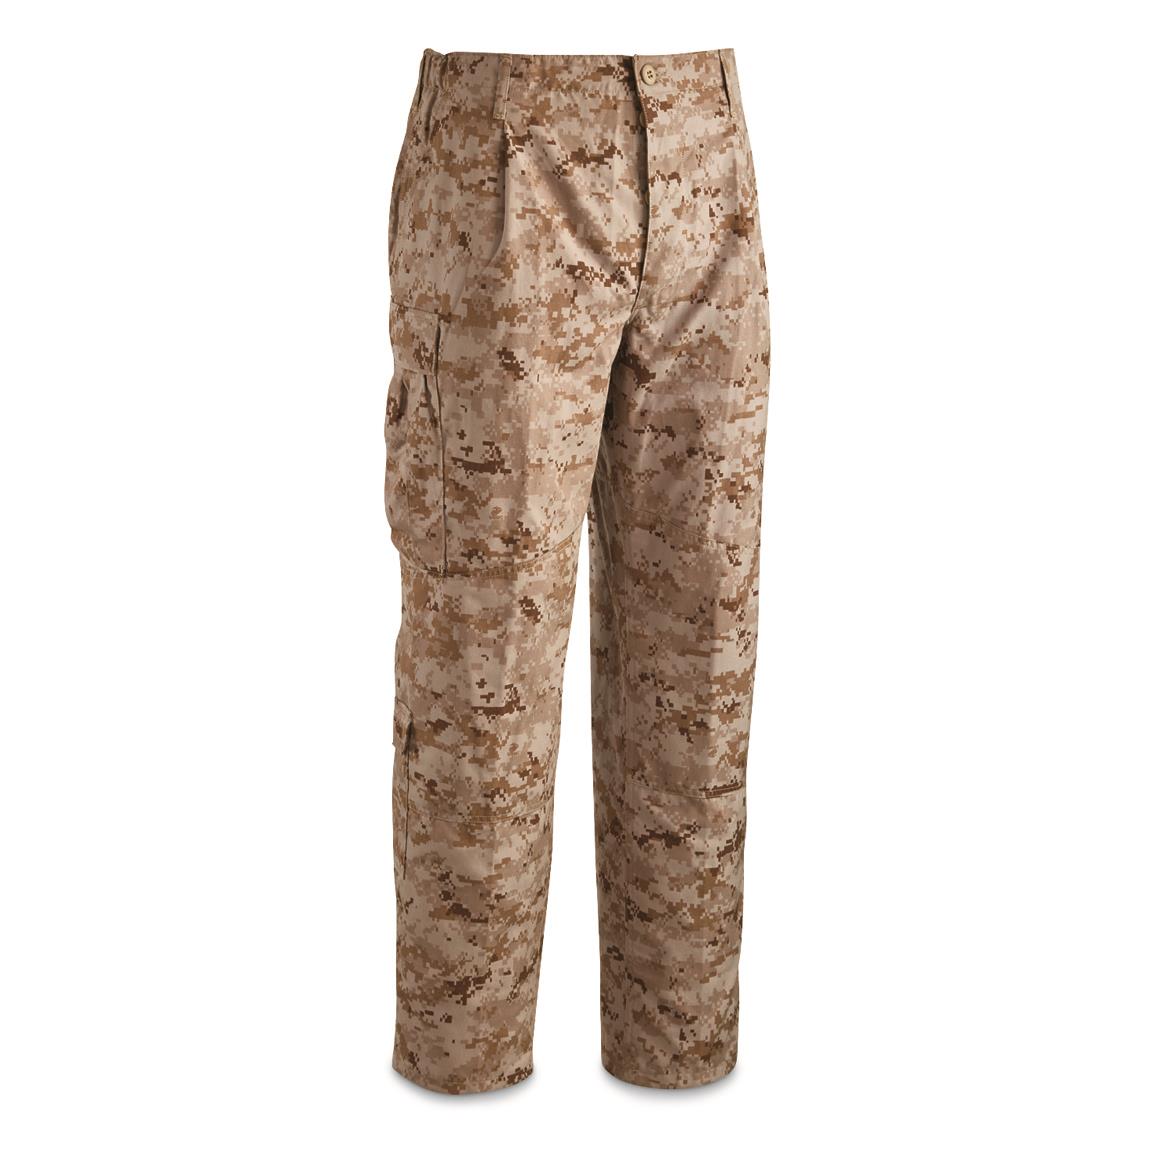 U.S. Military Surplus FROG Combat Pants, New, Digital Desert